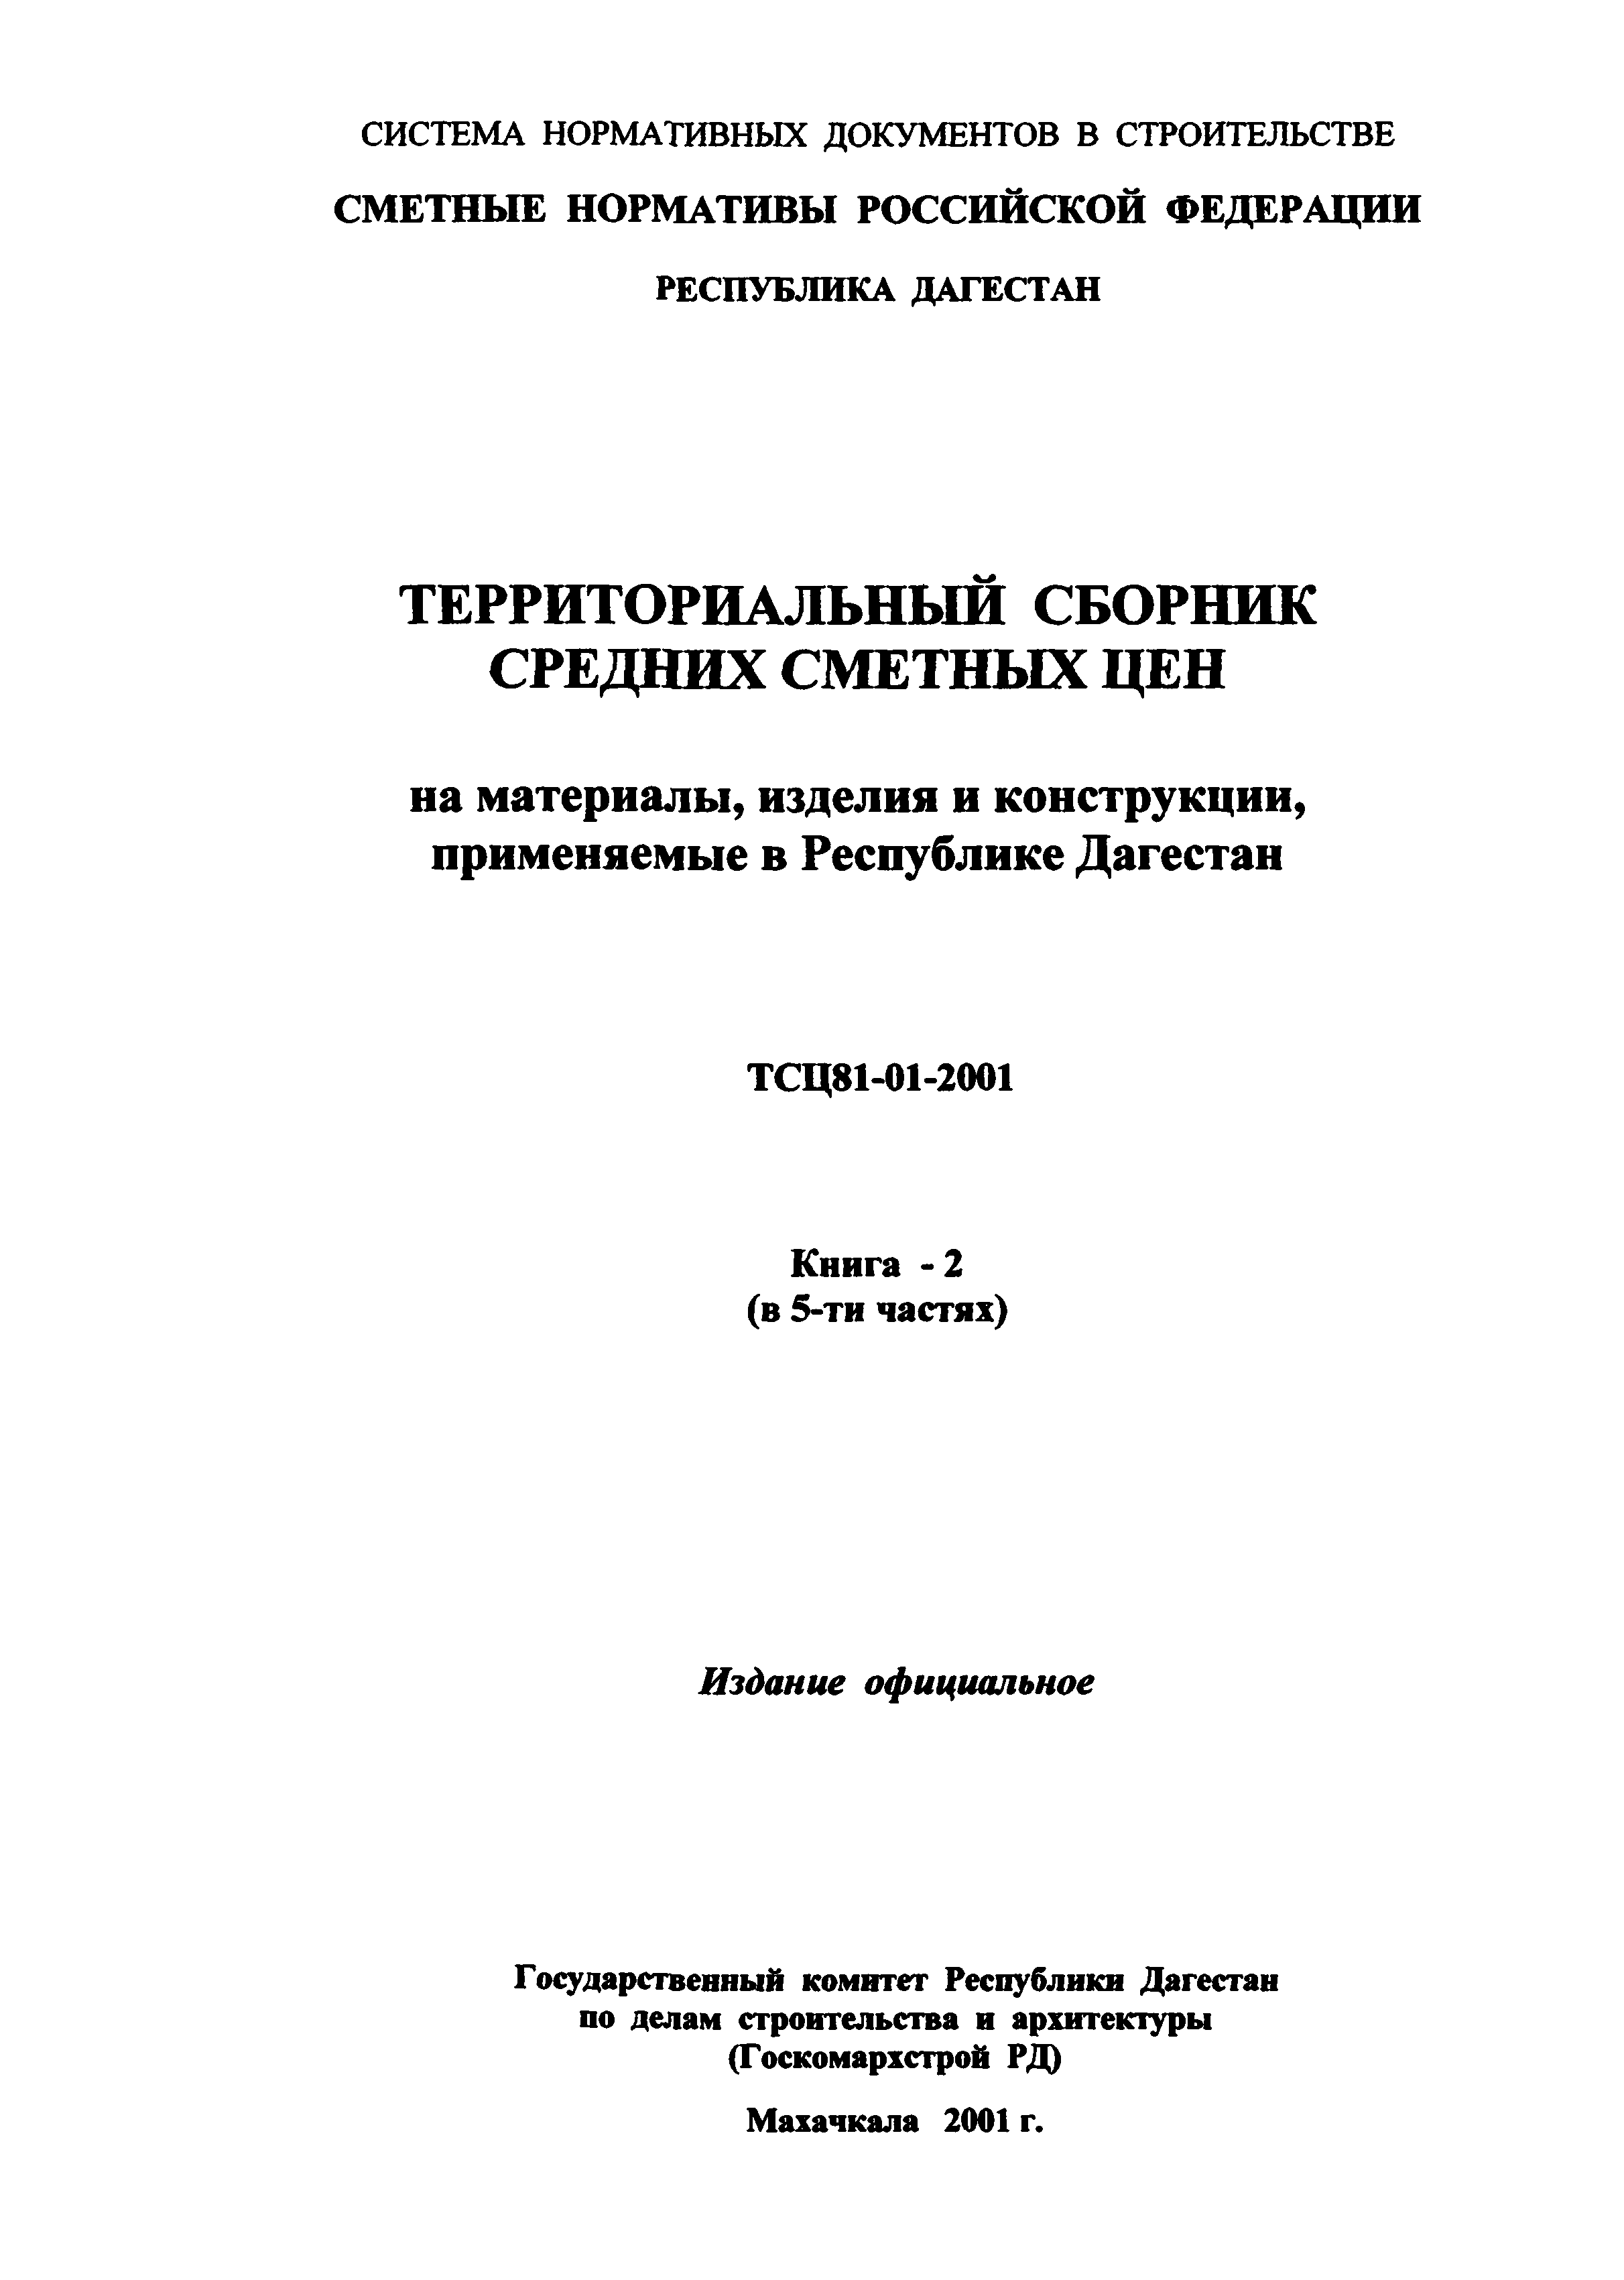 ТСЦ Республика Дагестан 81-01-2001